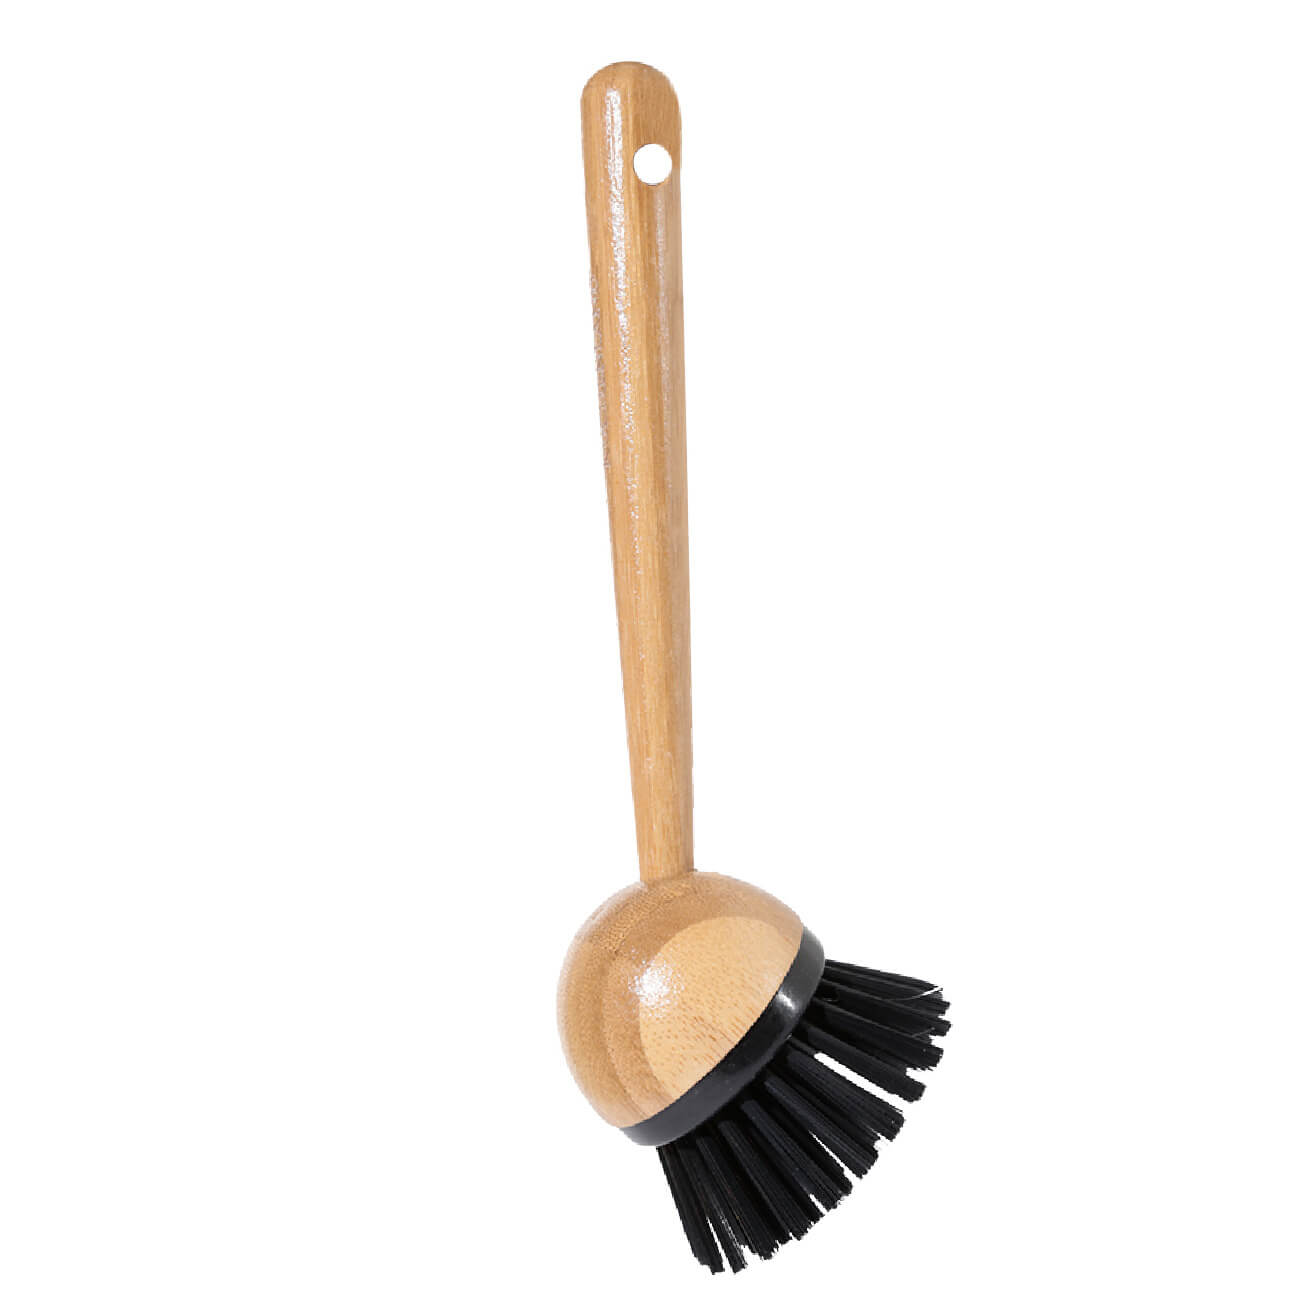 Щетка для уборки, 21 см, пластик/бамбук, черная, Black clean зубная щетка детская бамбук